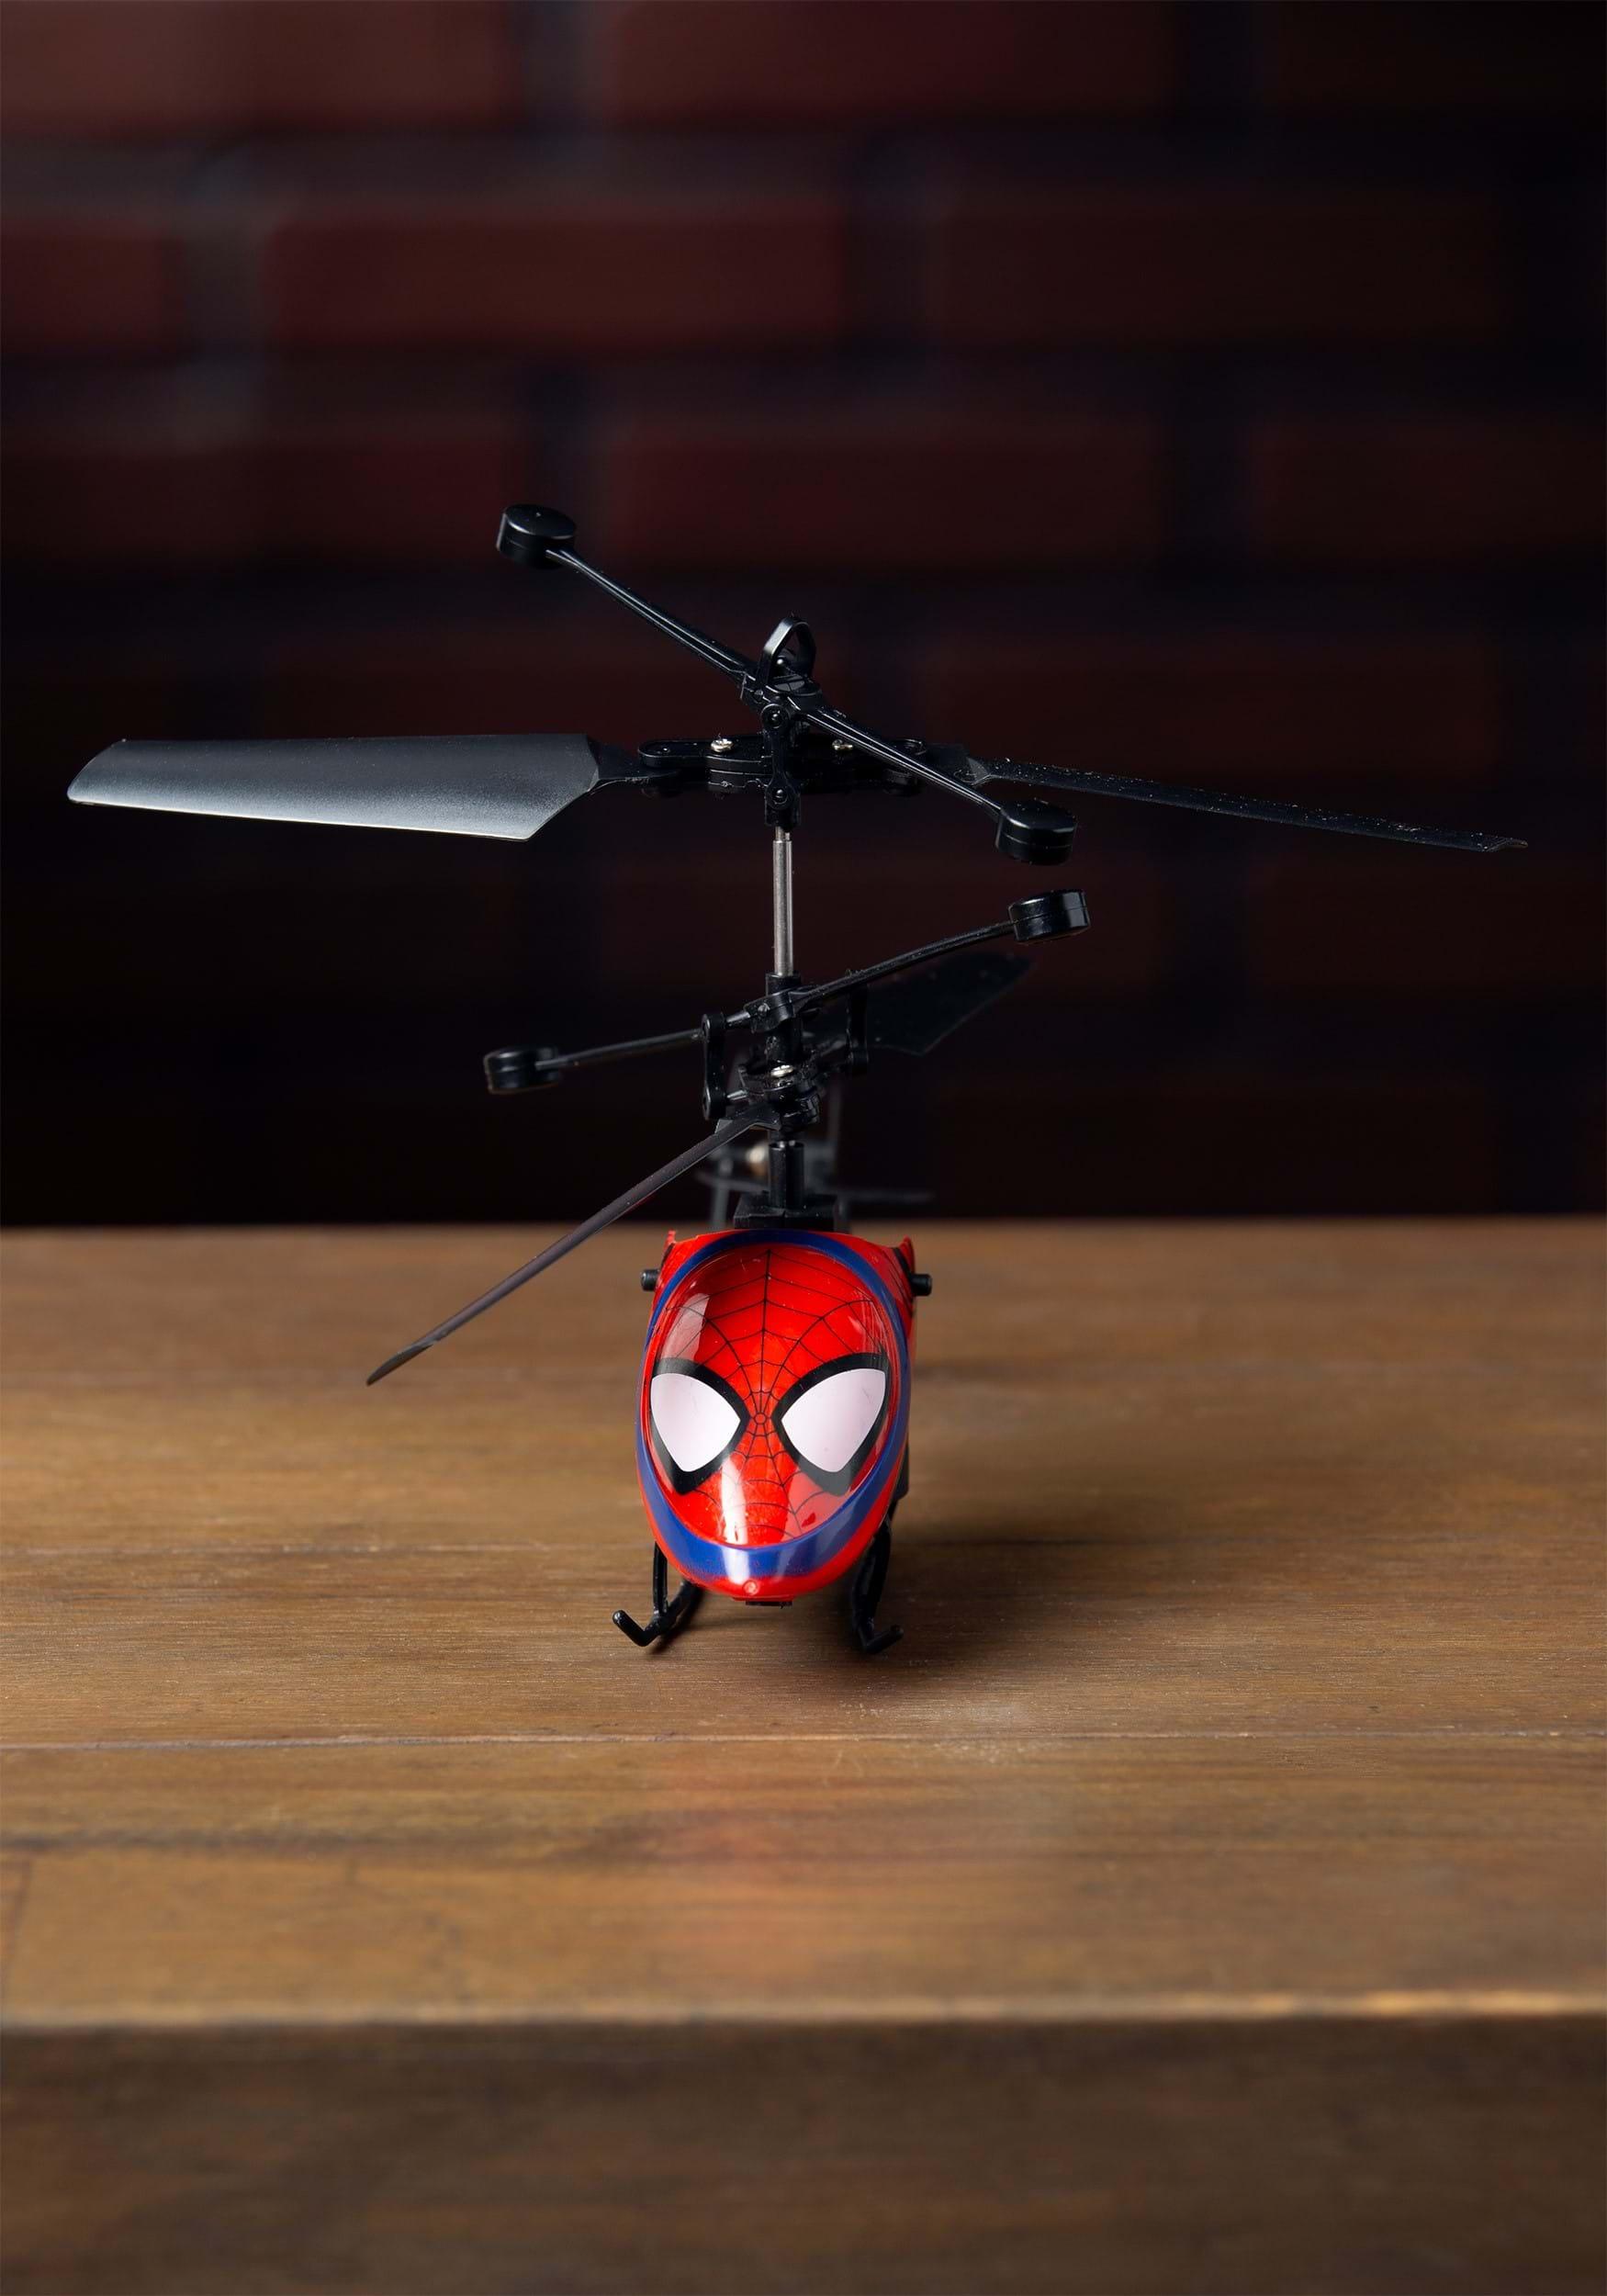 Marvel Spider Man 2Ch Ir Helicopter: Downsides of Marvel Spider Man 2CH IR Helicopter